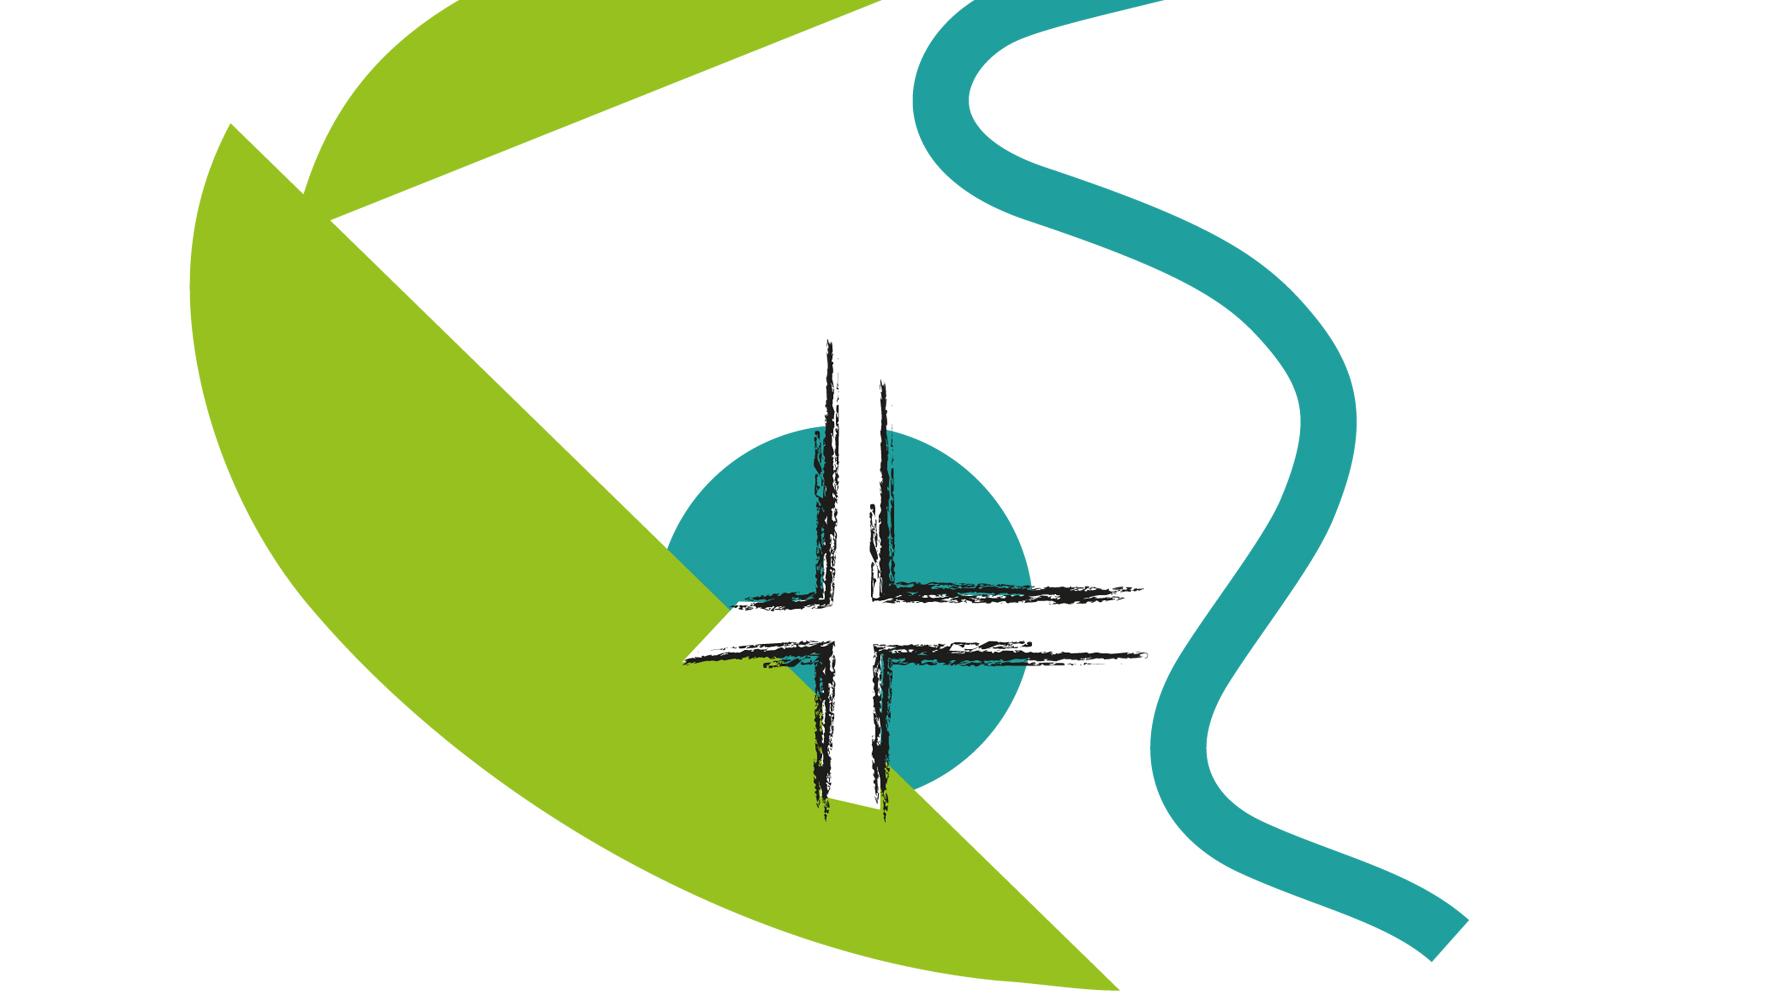 Logo Region Krefeld im Bistum AC